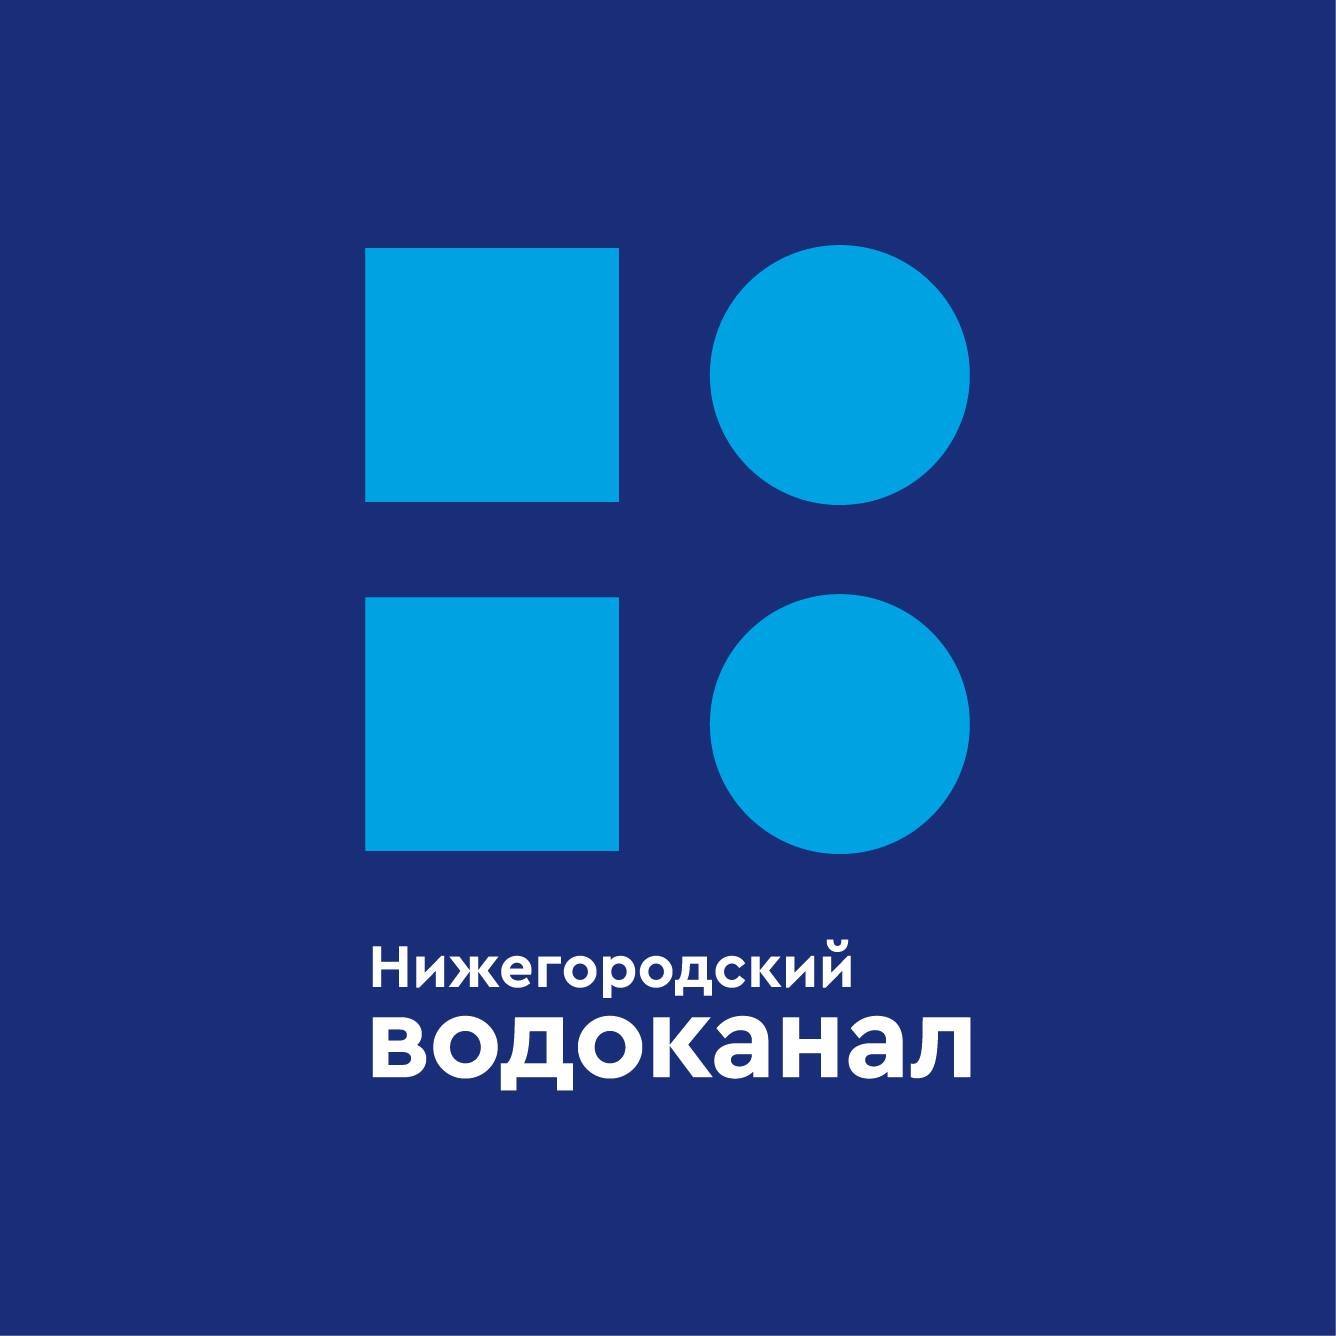 Nizhny Novgorod Vodokanal Open Joint Stock